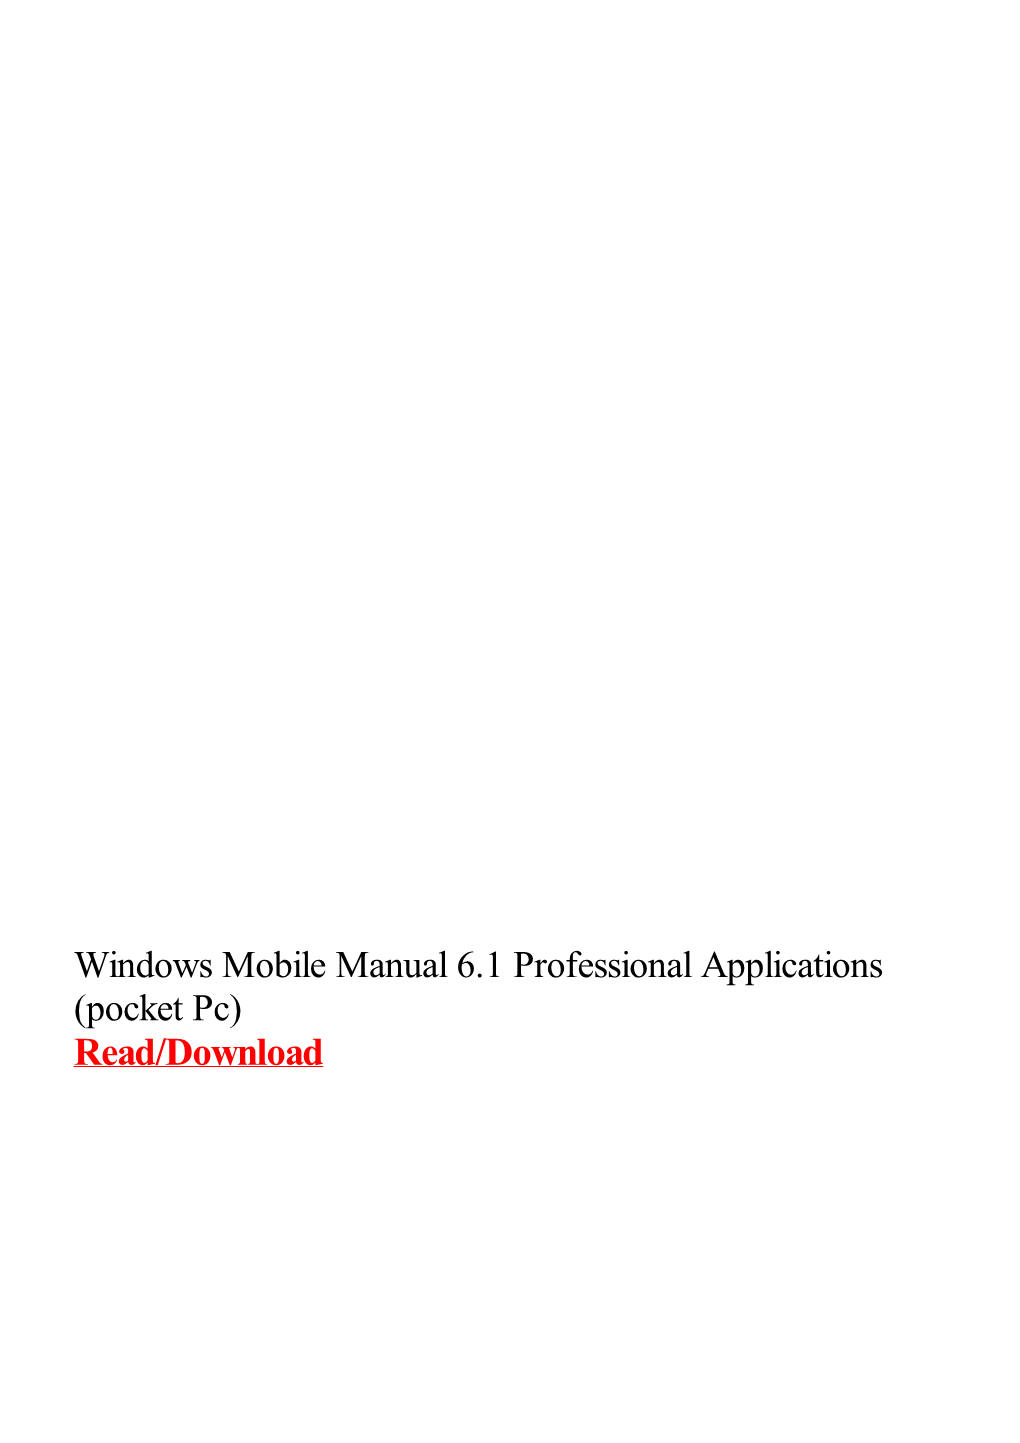 Windows Mobile Manual 6.1 Professional Applications (Pocket Pc)